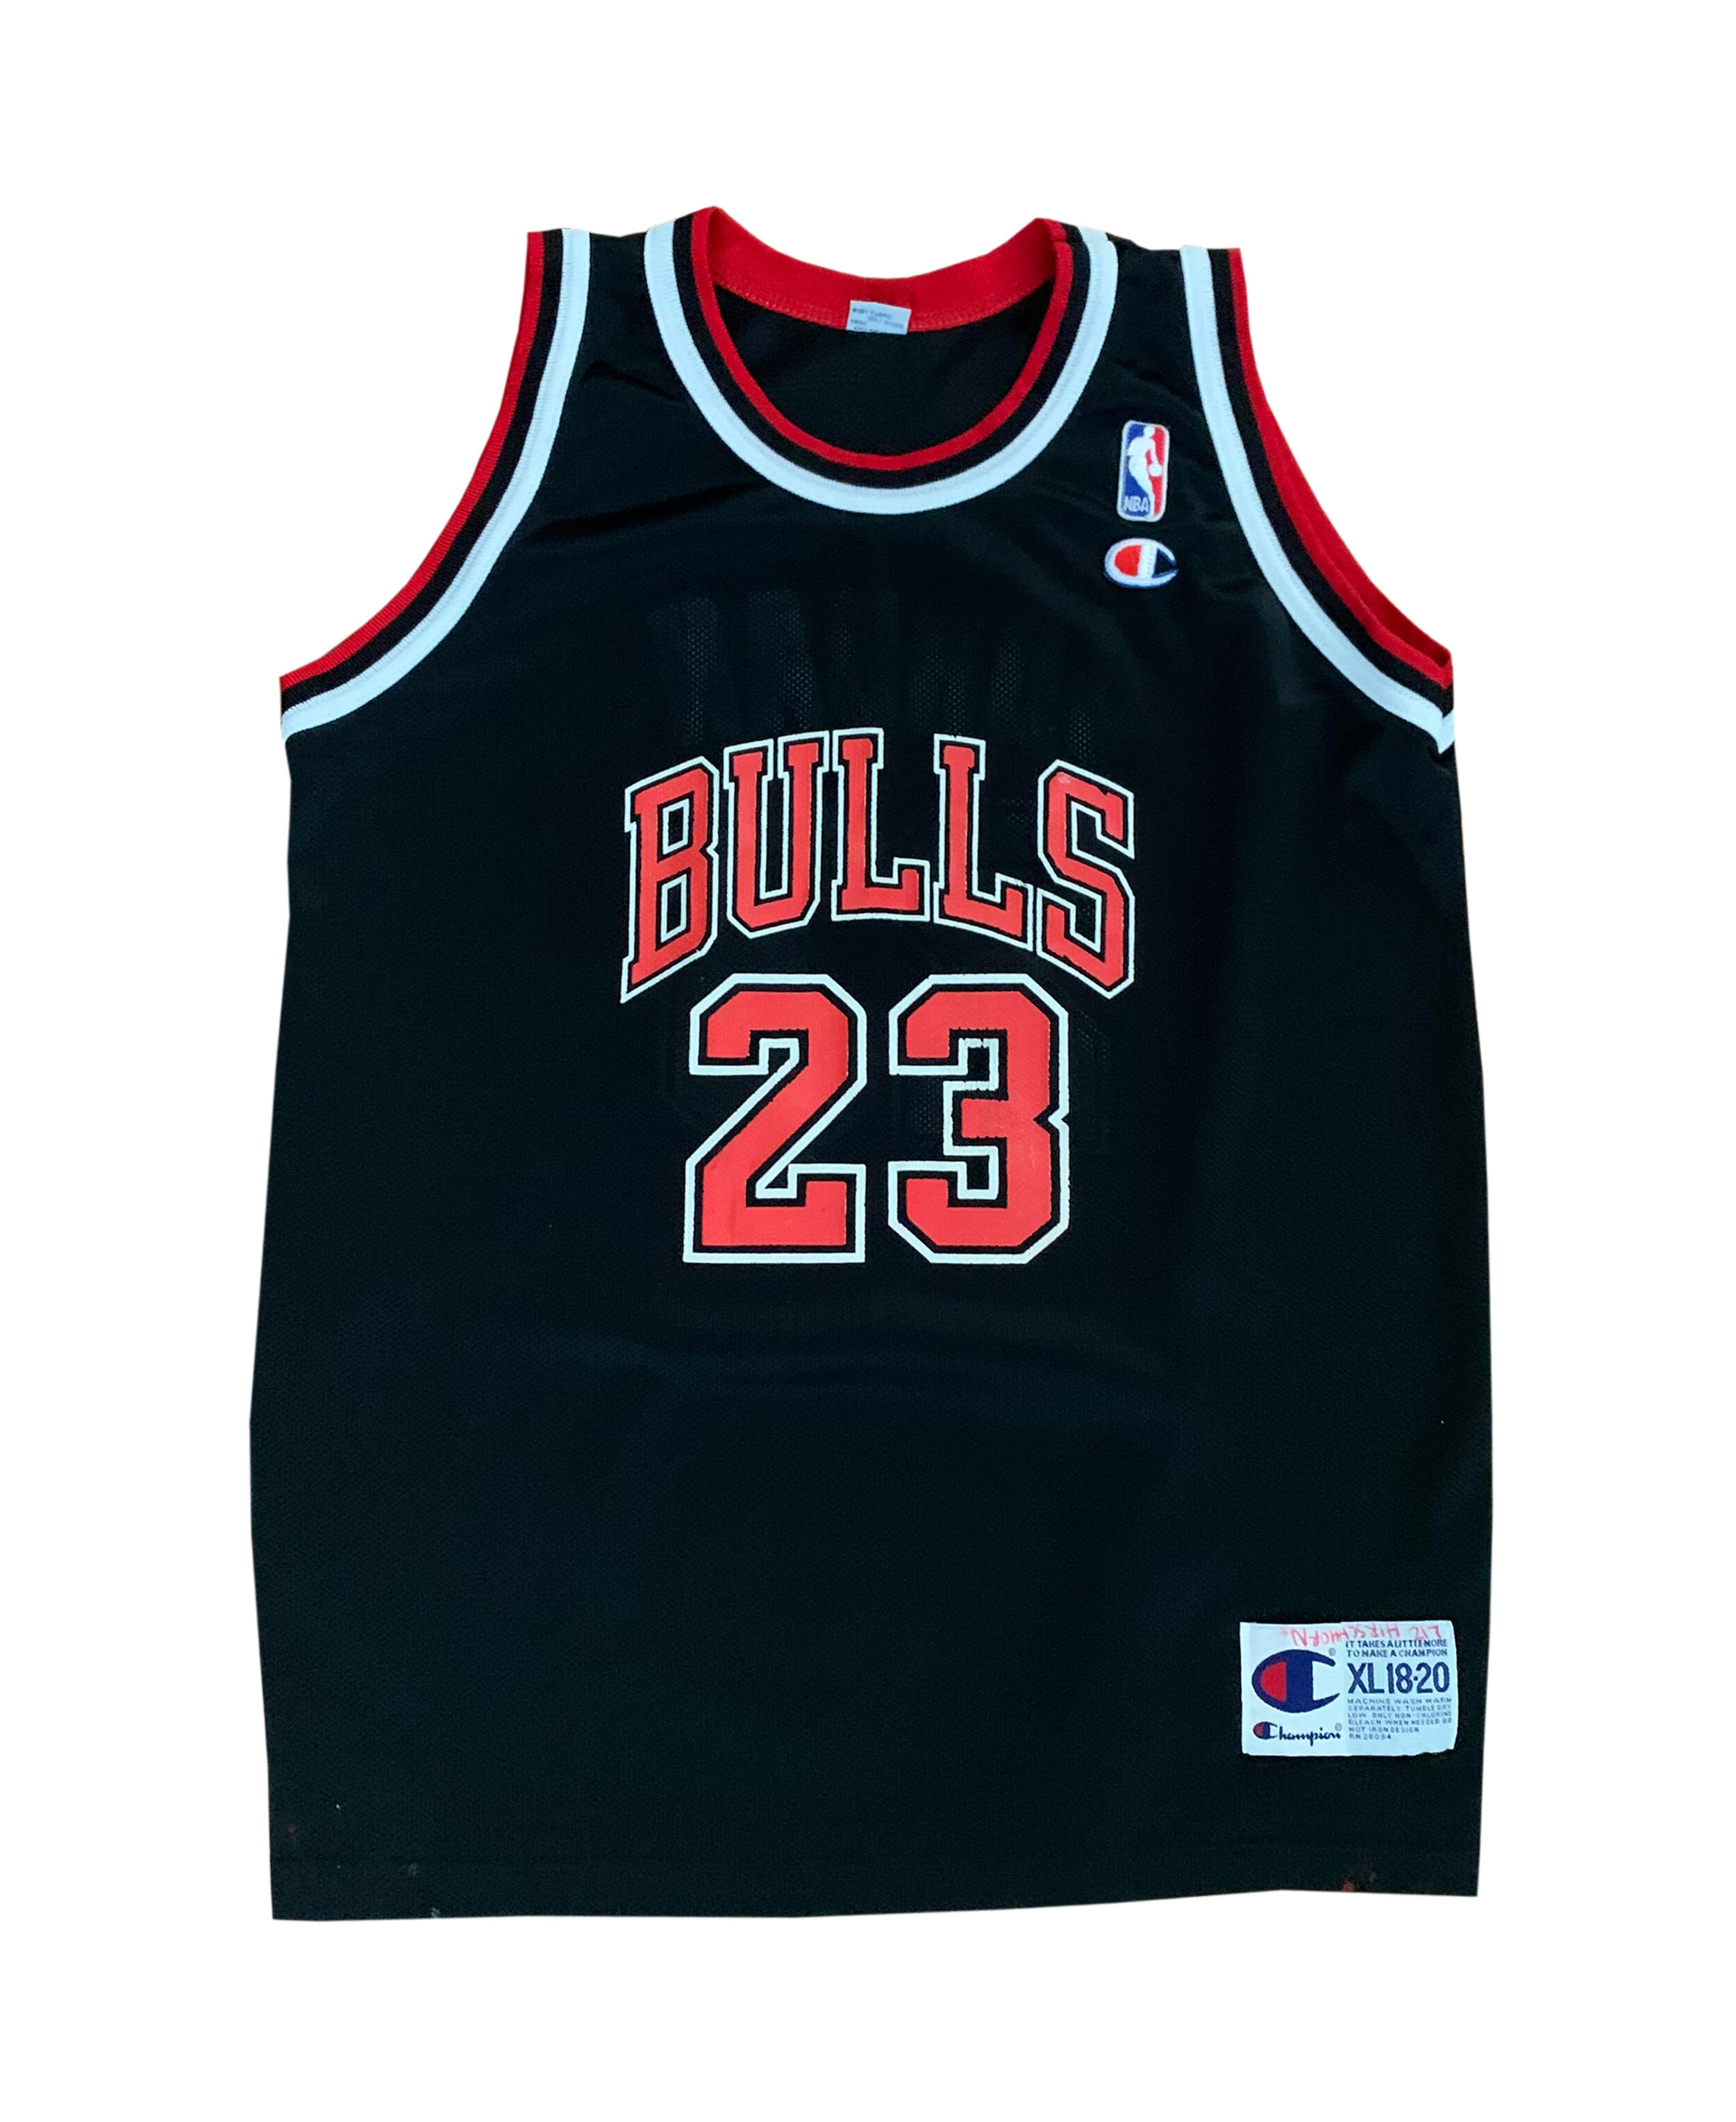 90s bulls jersey